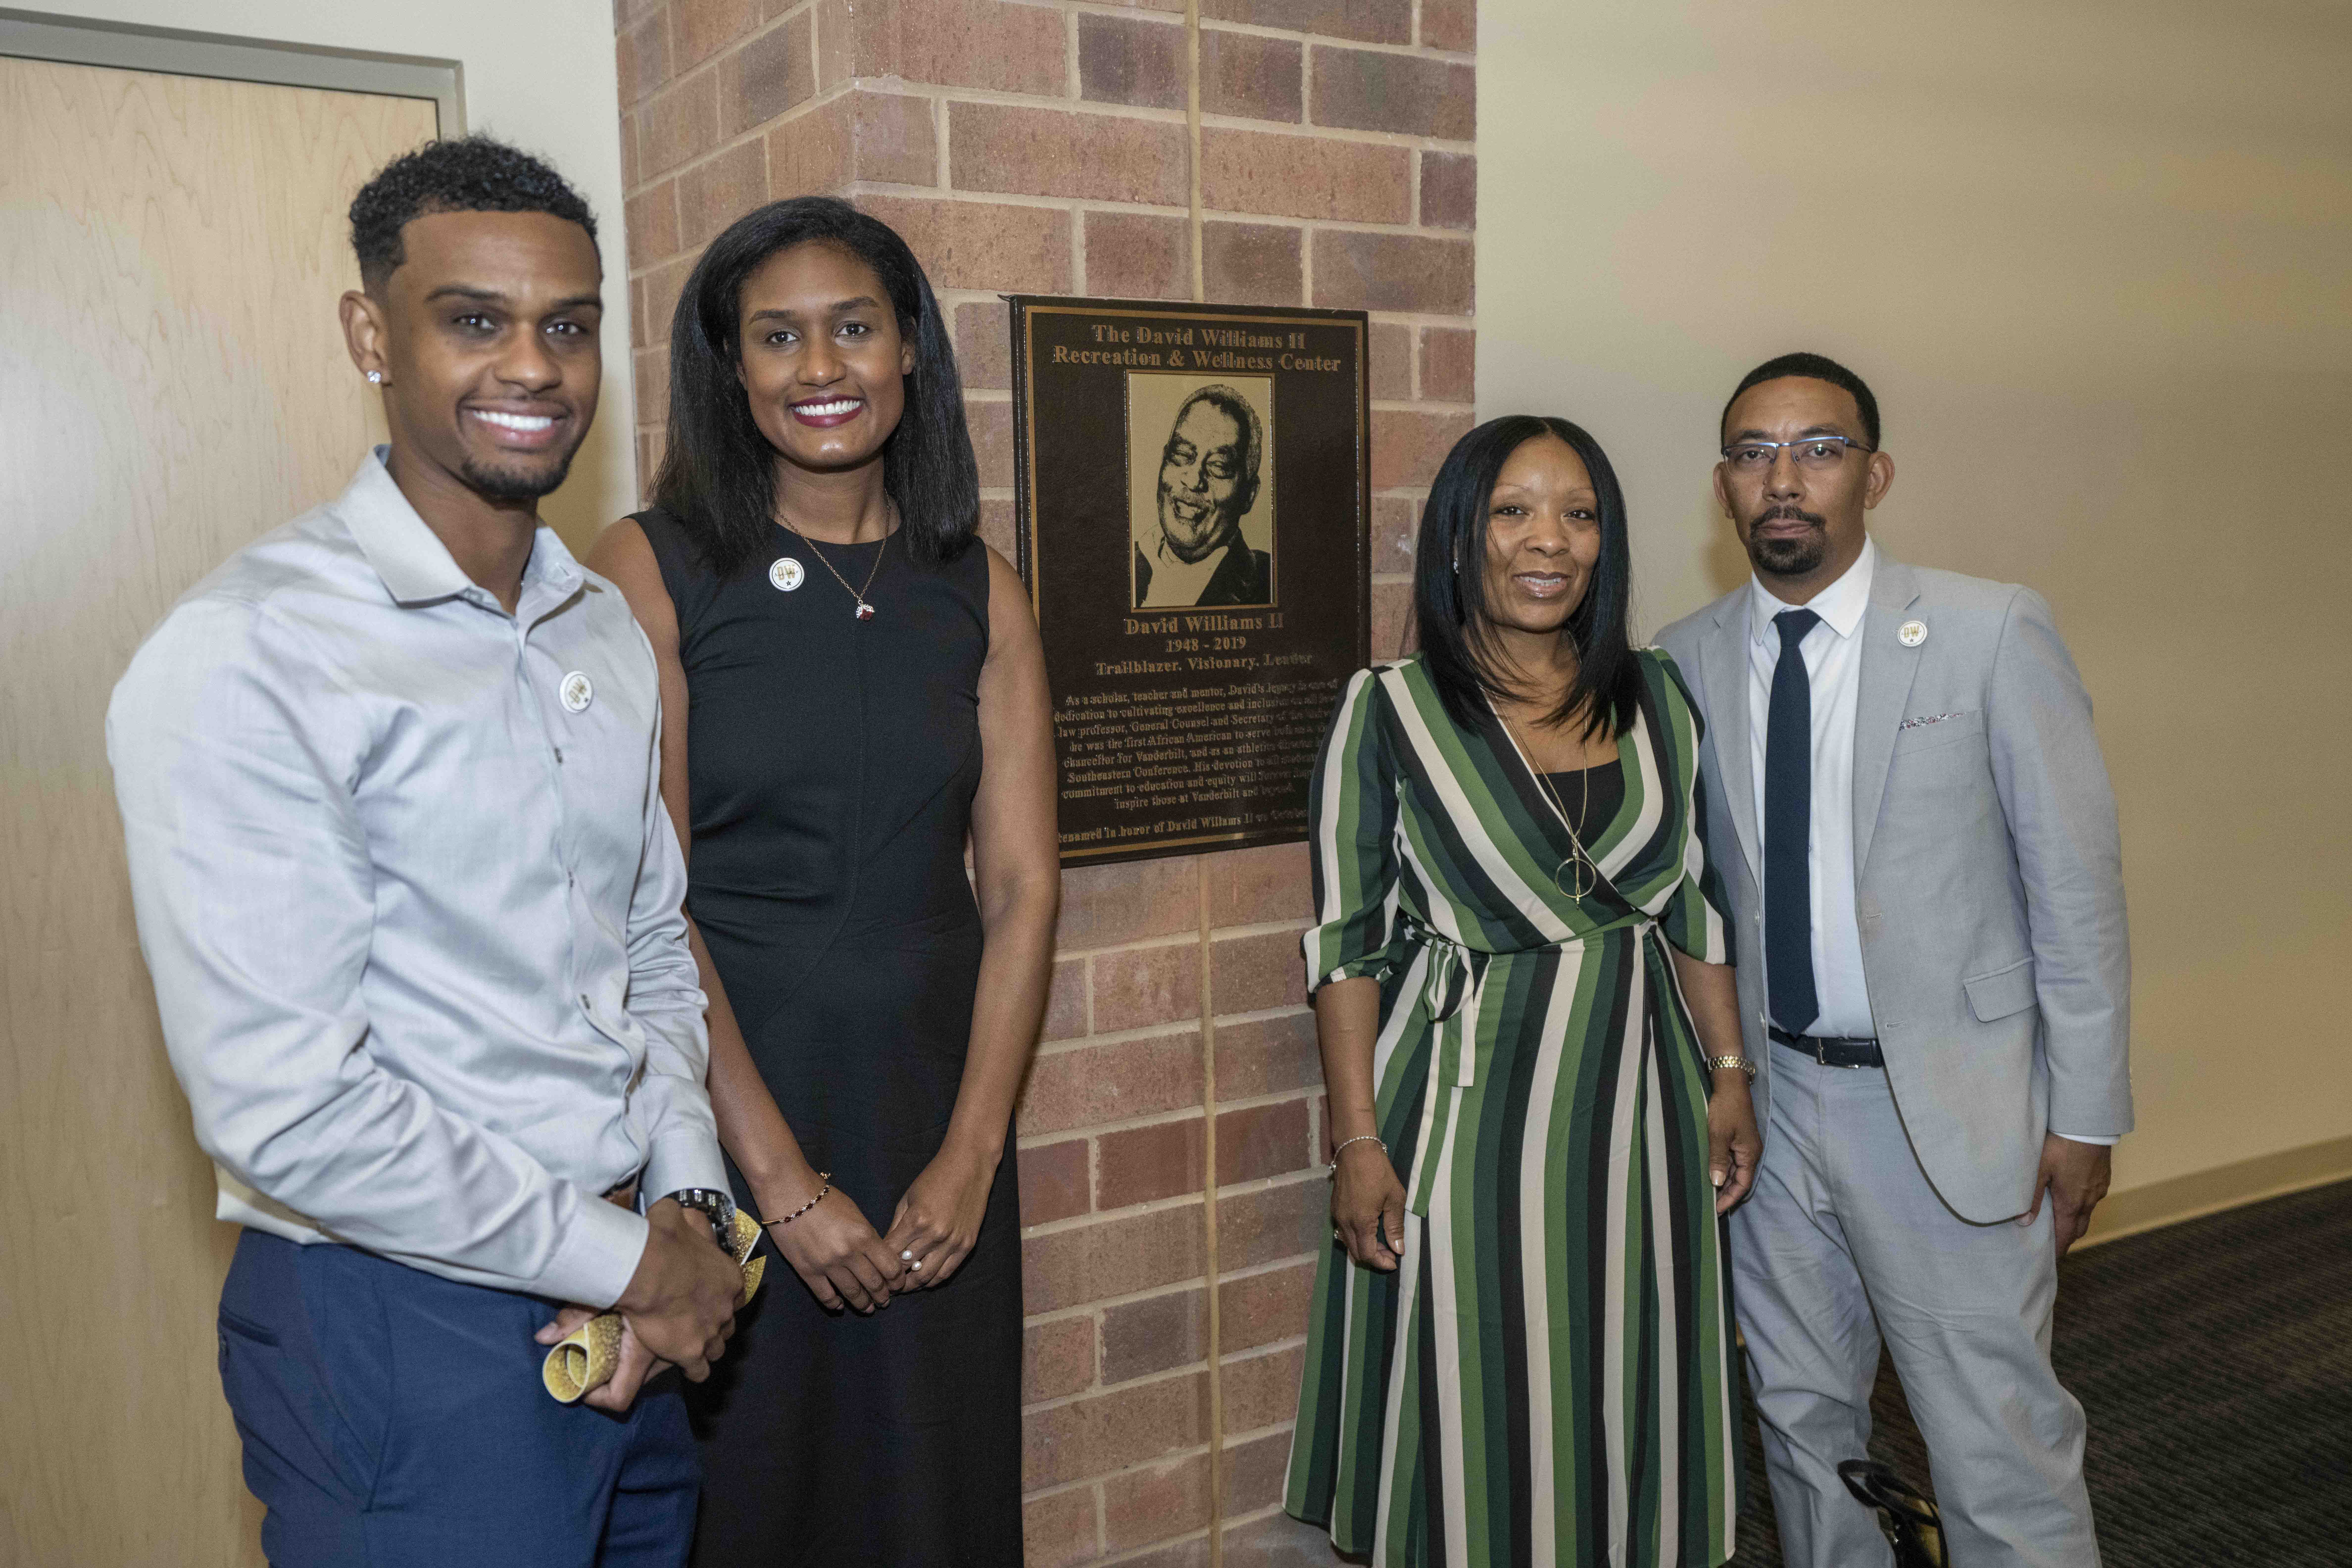 David Williams' children stand next to a new plaque honoring Vanderbilt's late former athletics director and vice chancellor. (John Russell/Vanderbilt University)